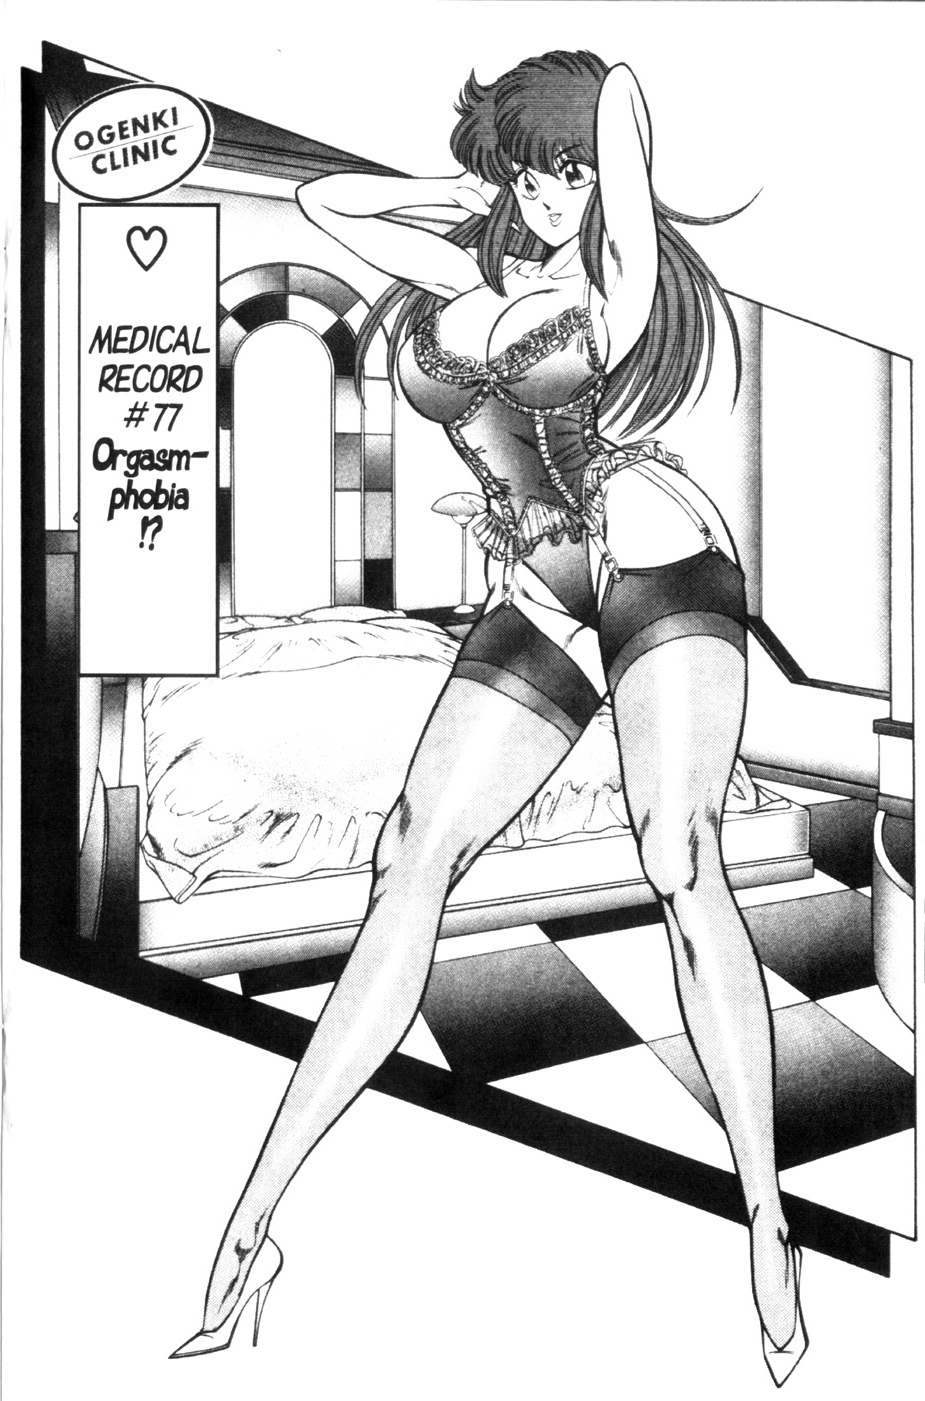 Ogenki Clinic Vol.6 15 hentai manga